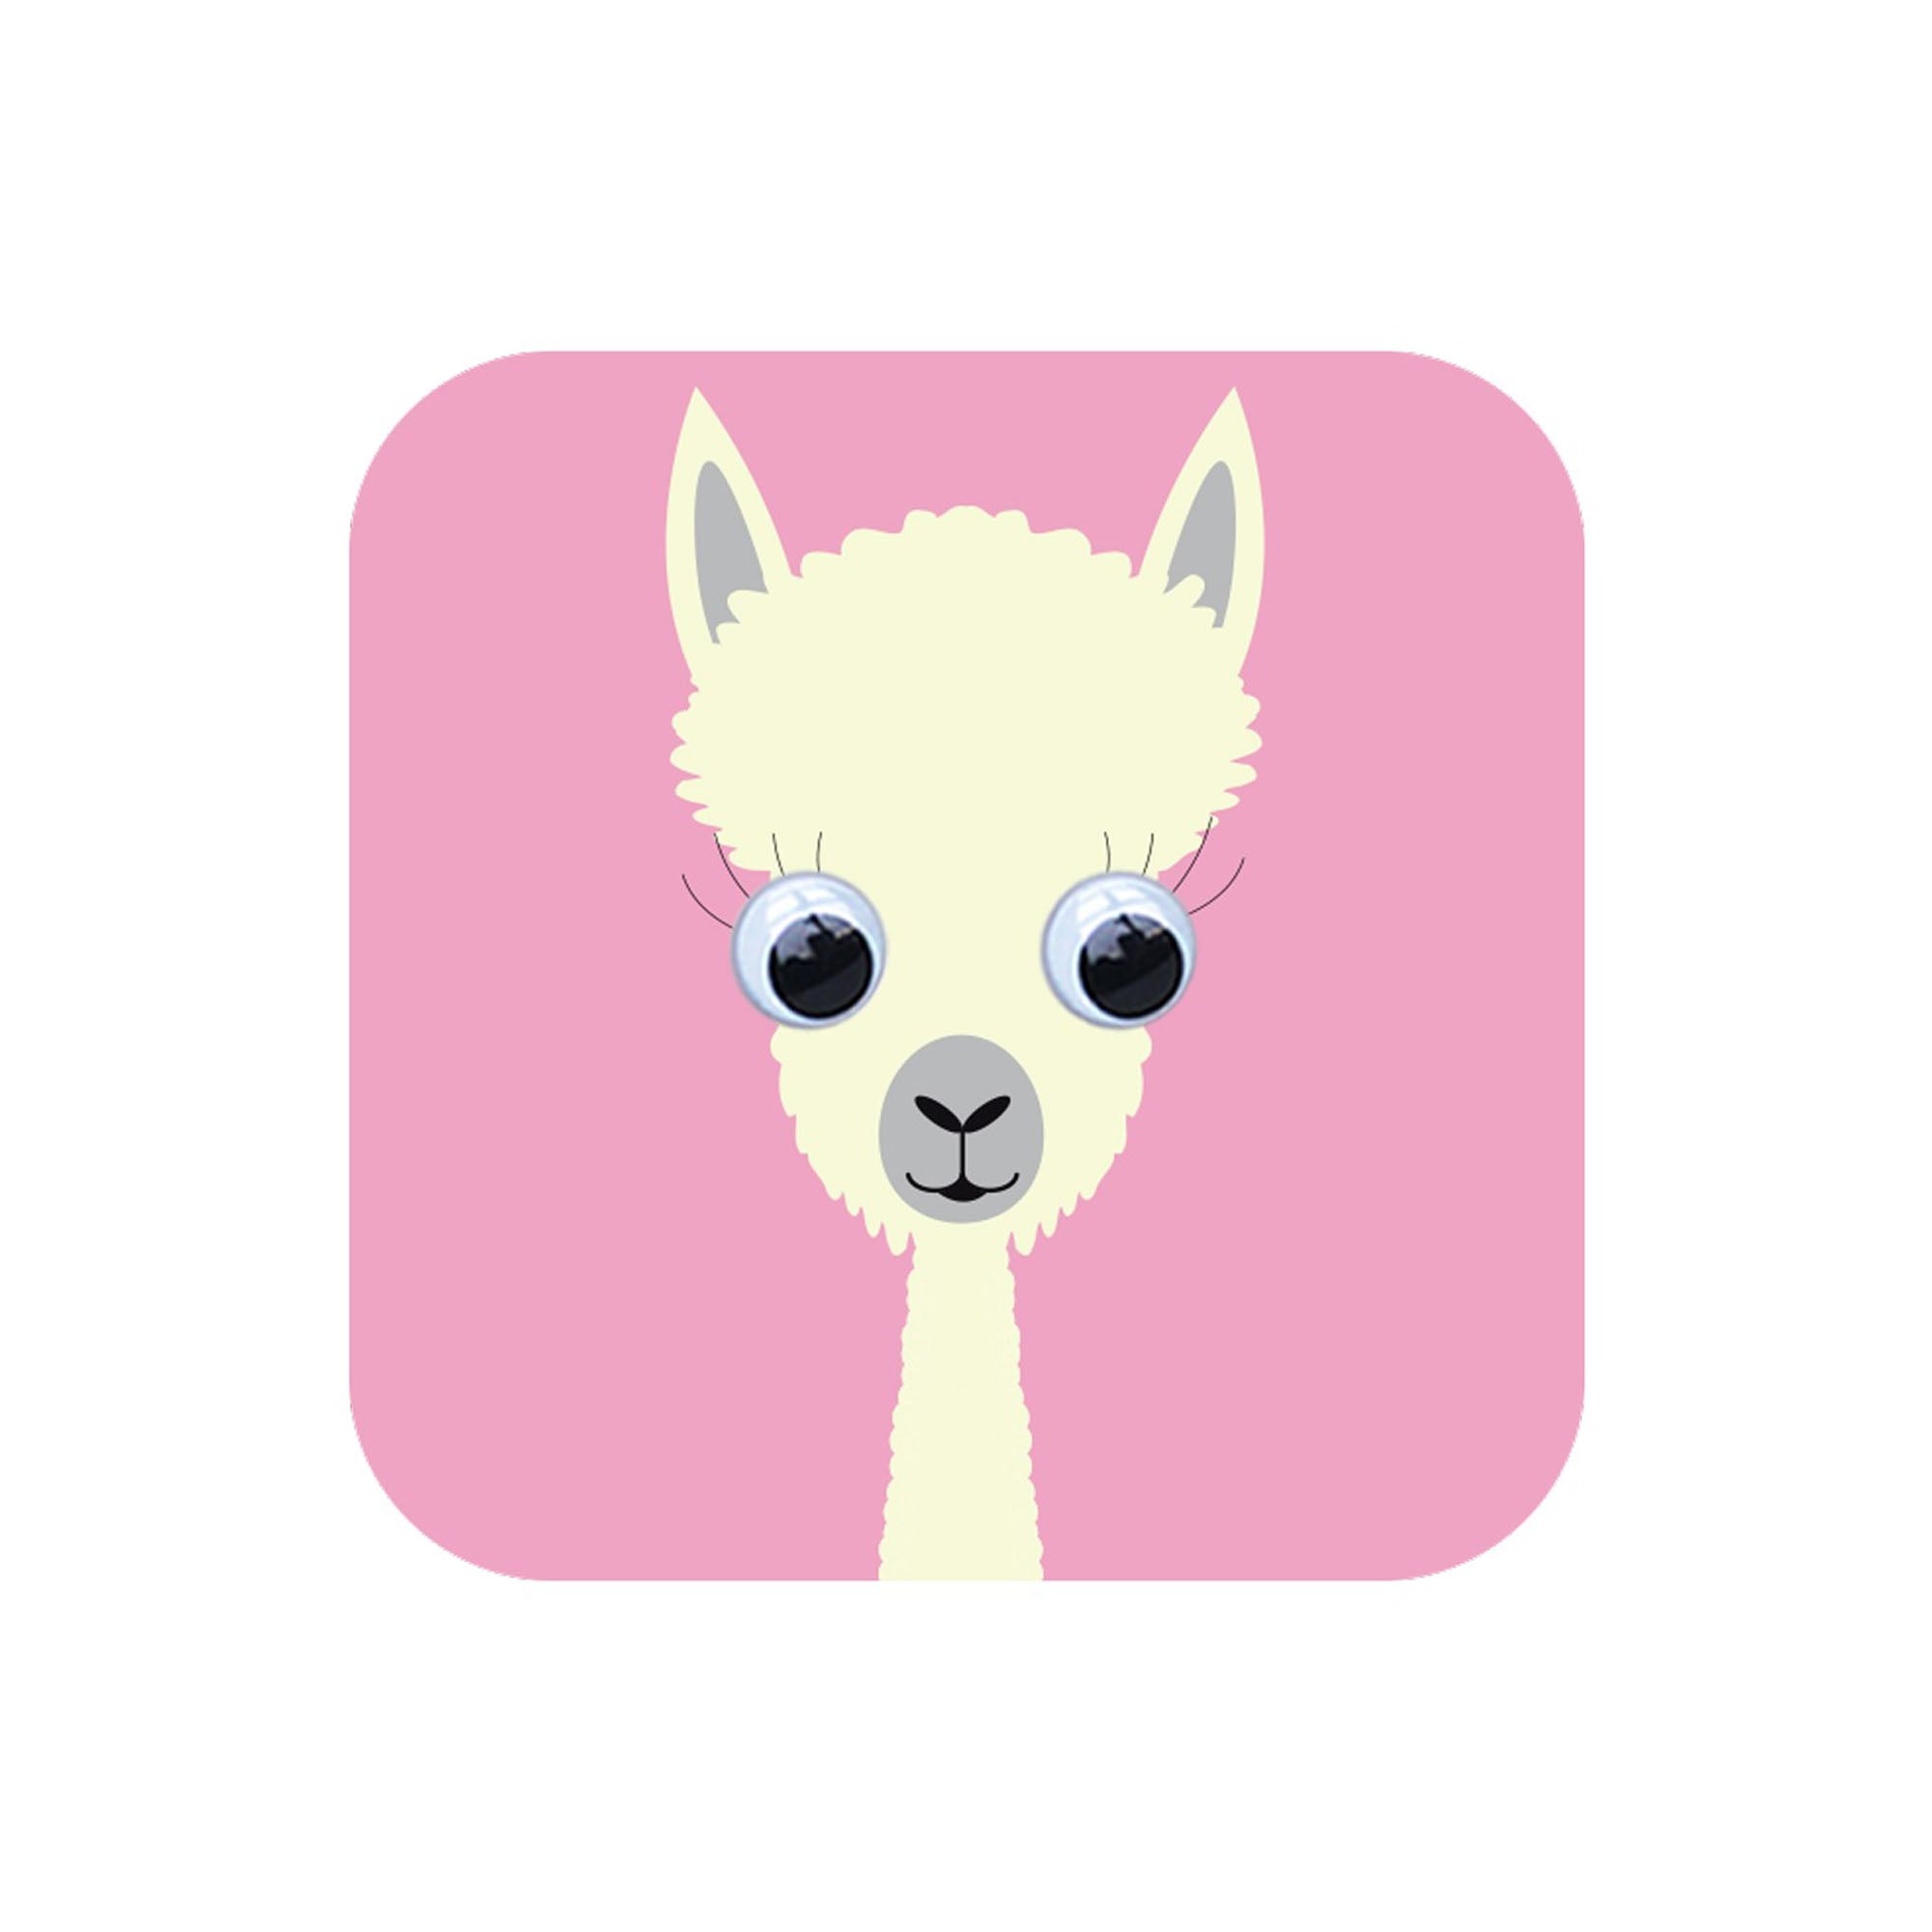 Googly Eyed Llama Greeting Card